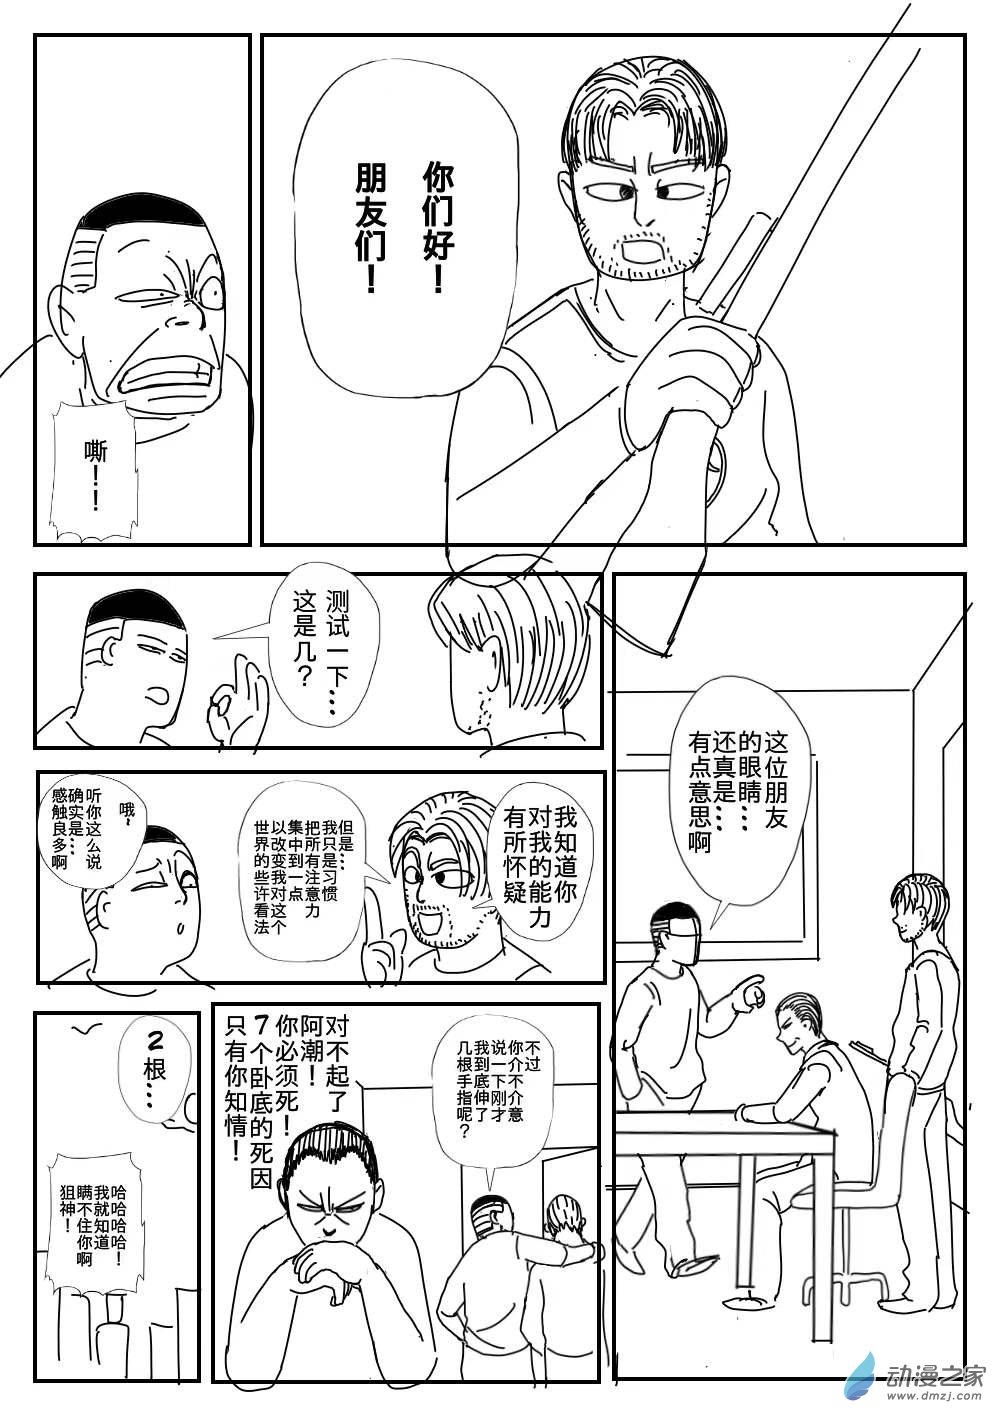 K神的短篇漫畫集 - 01 臥底阿潮 - 6